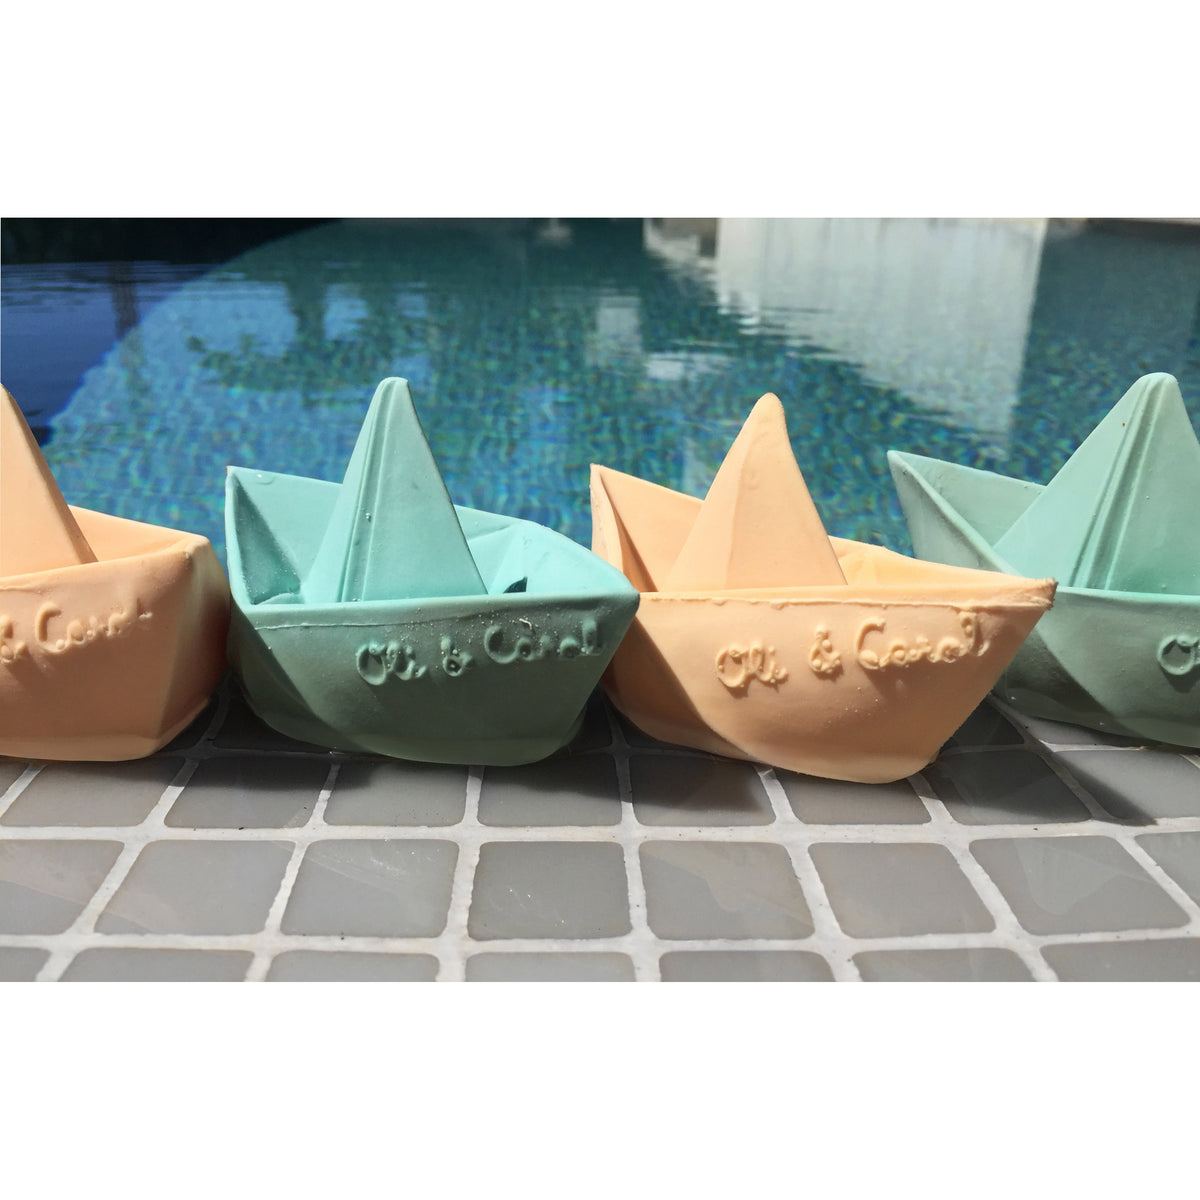 oli-&amp;-carol-origami-boat-nude- (25)